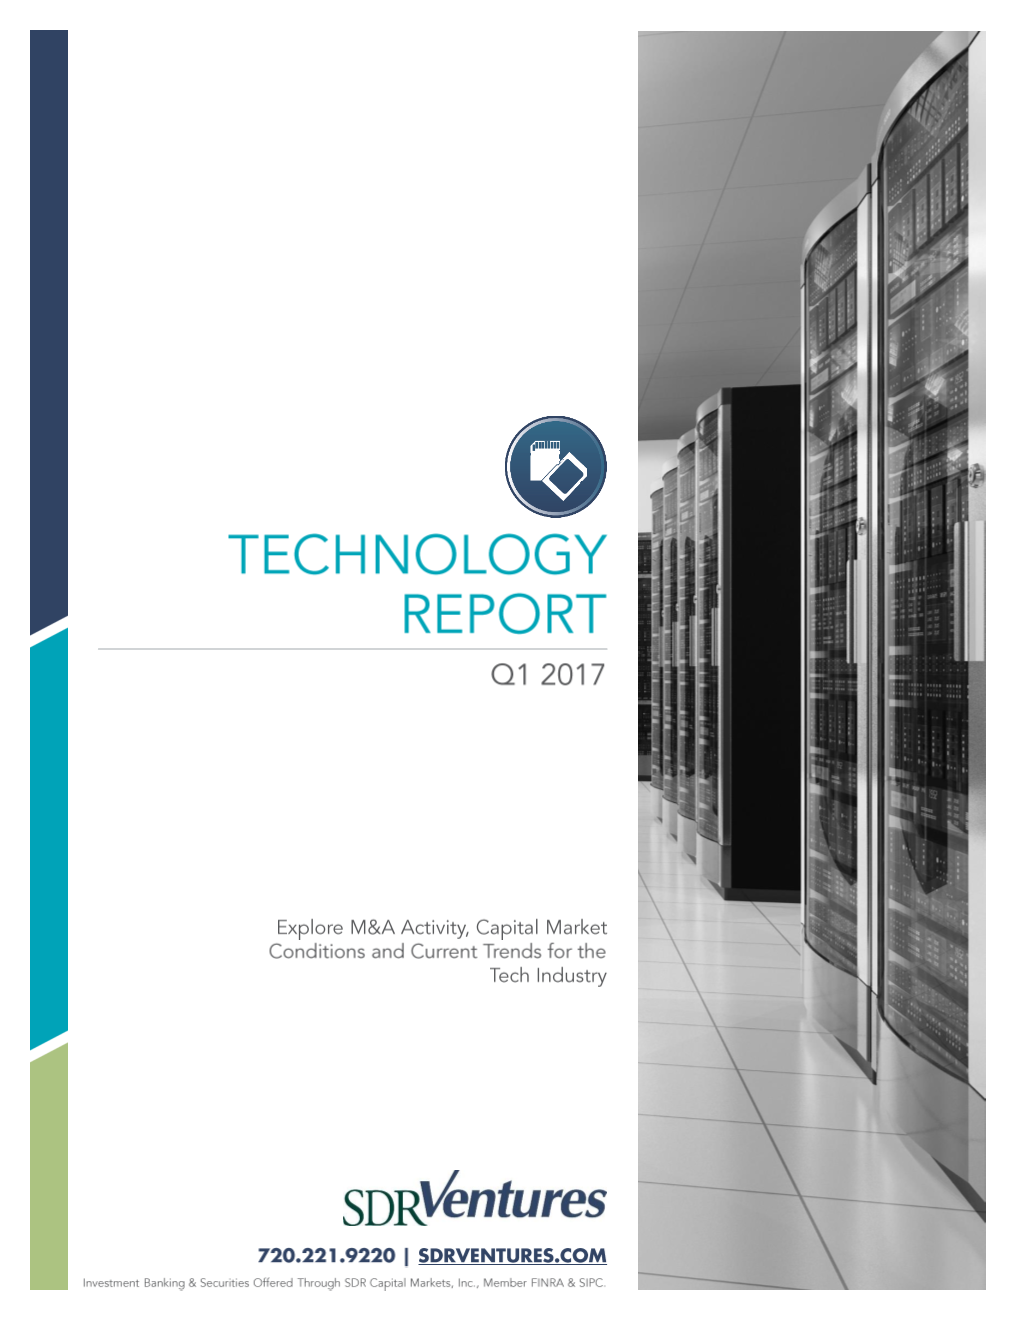 Technology Report Q1 2017